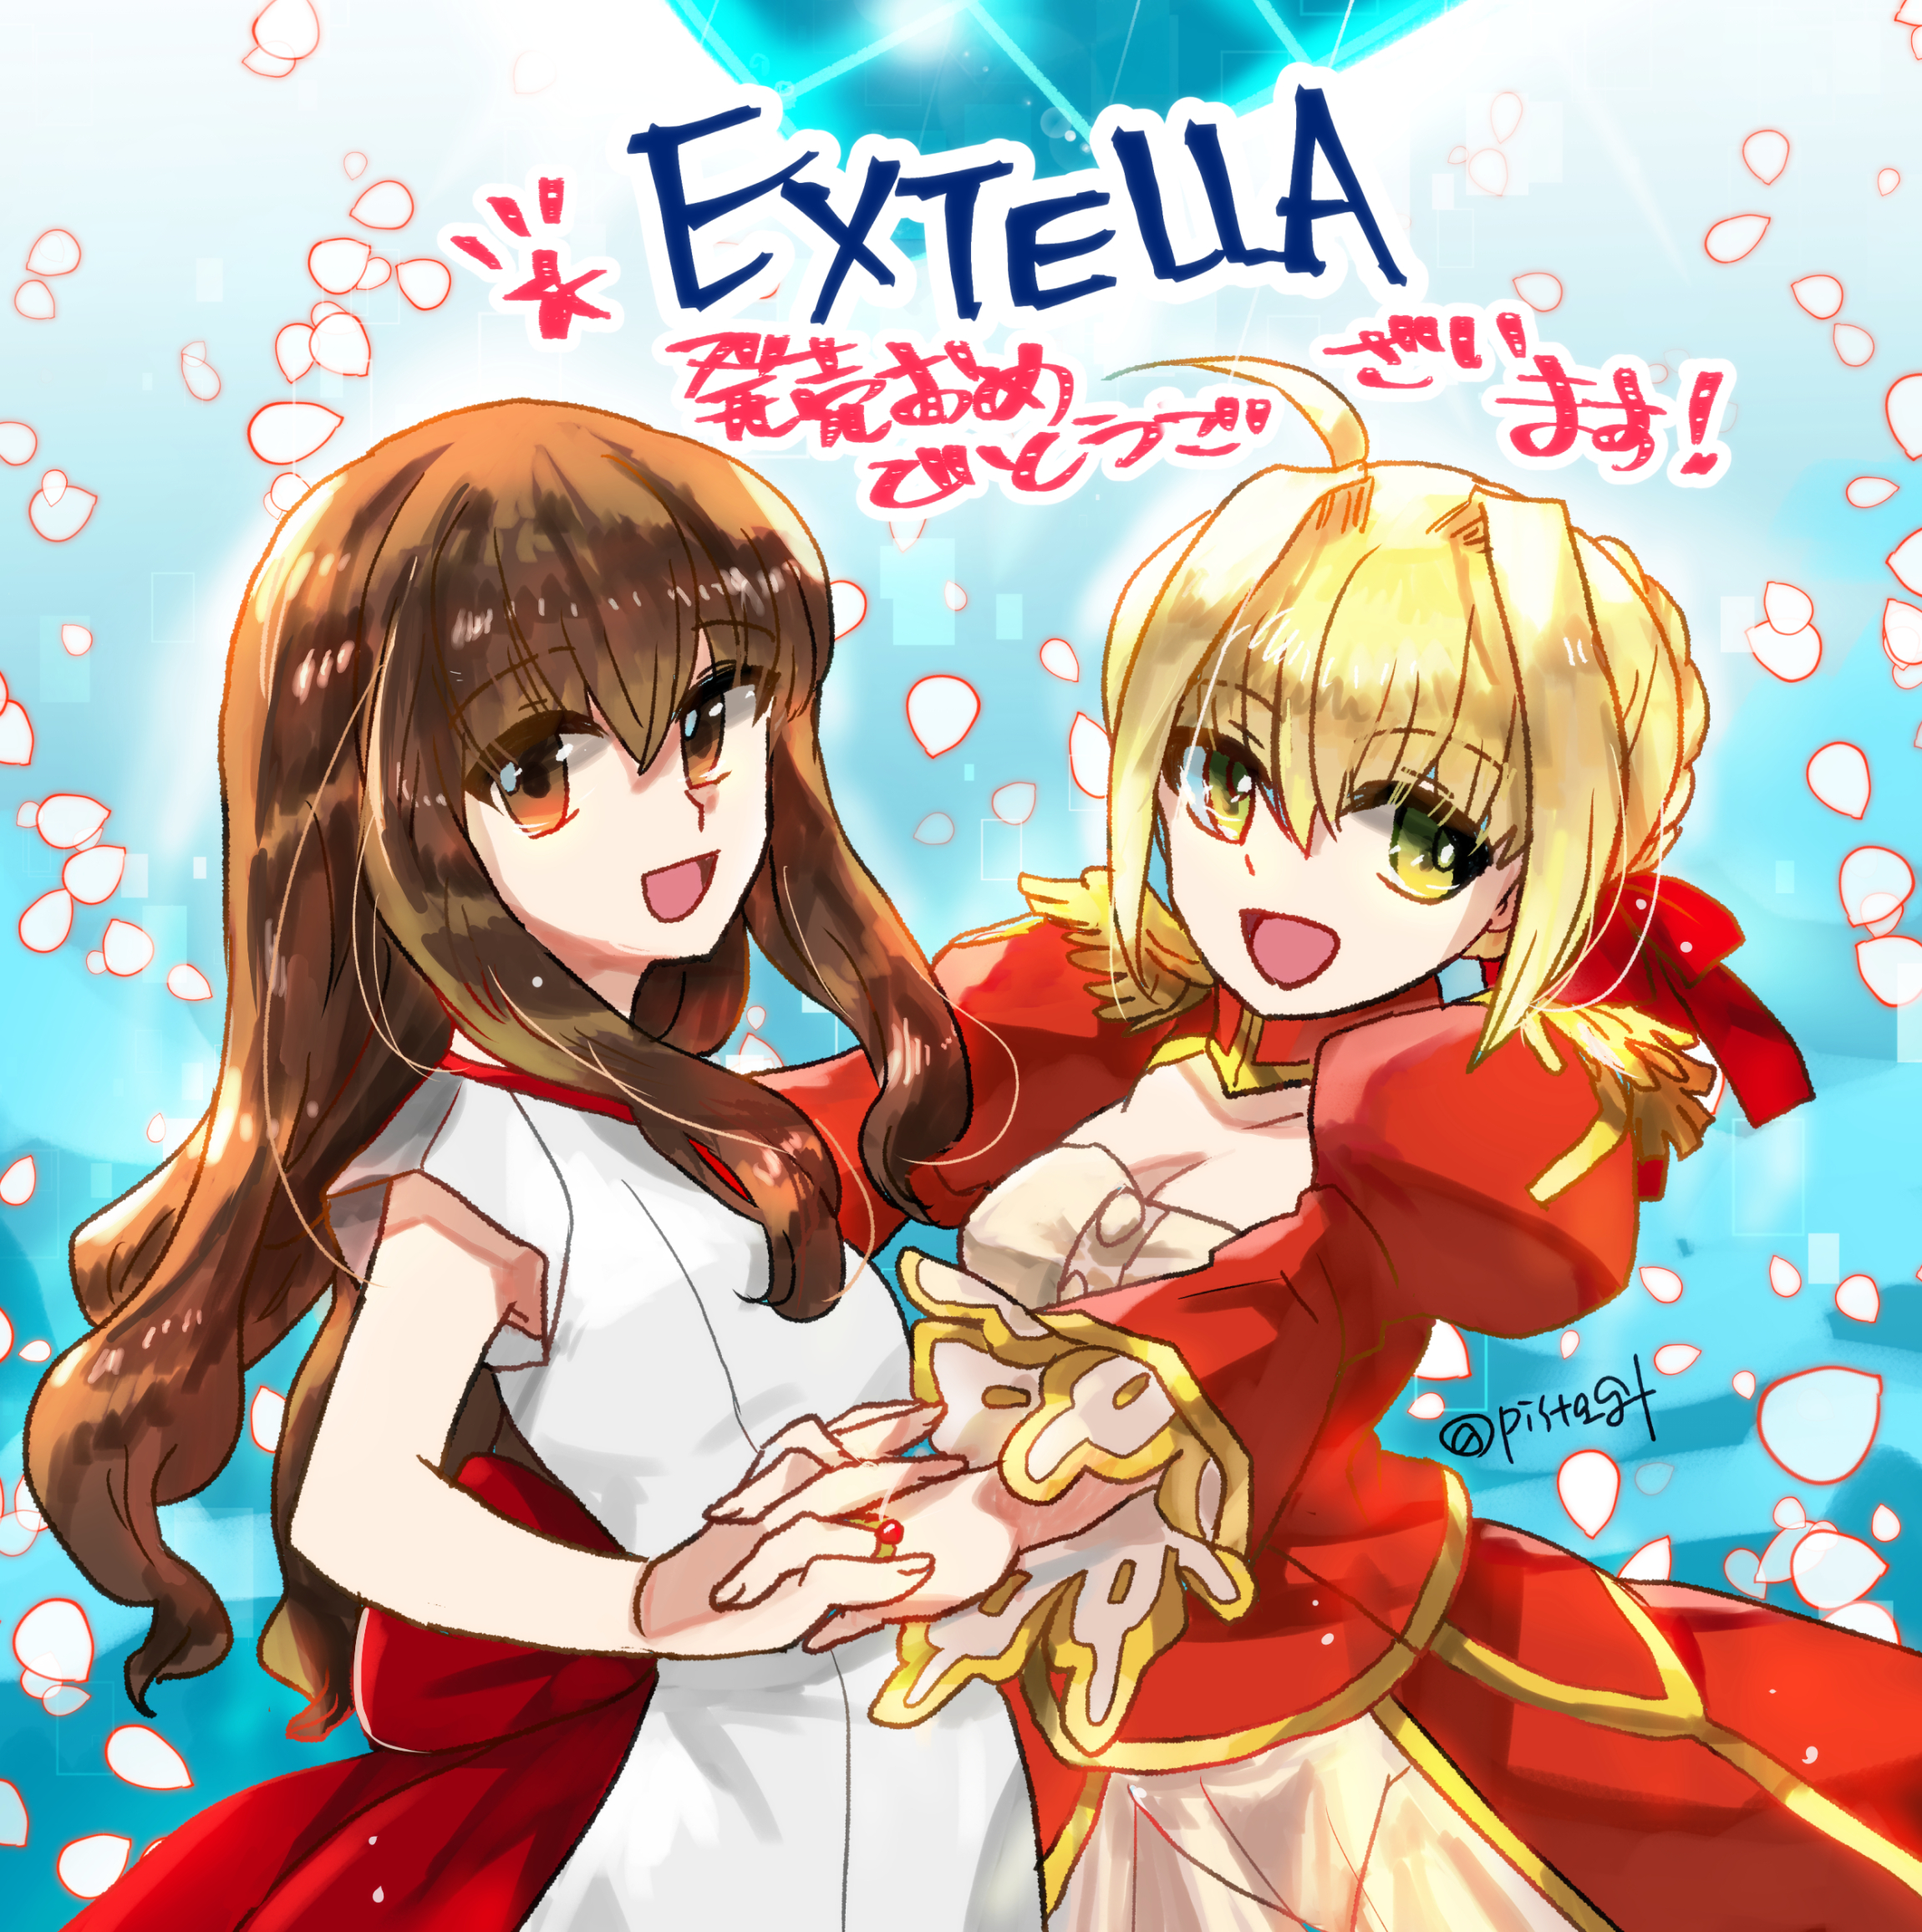 Fate/EXTELLA発売插画图片壁纸